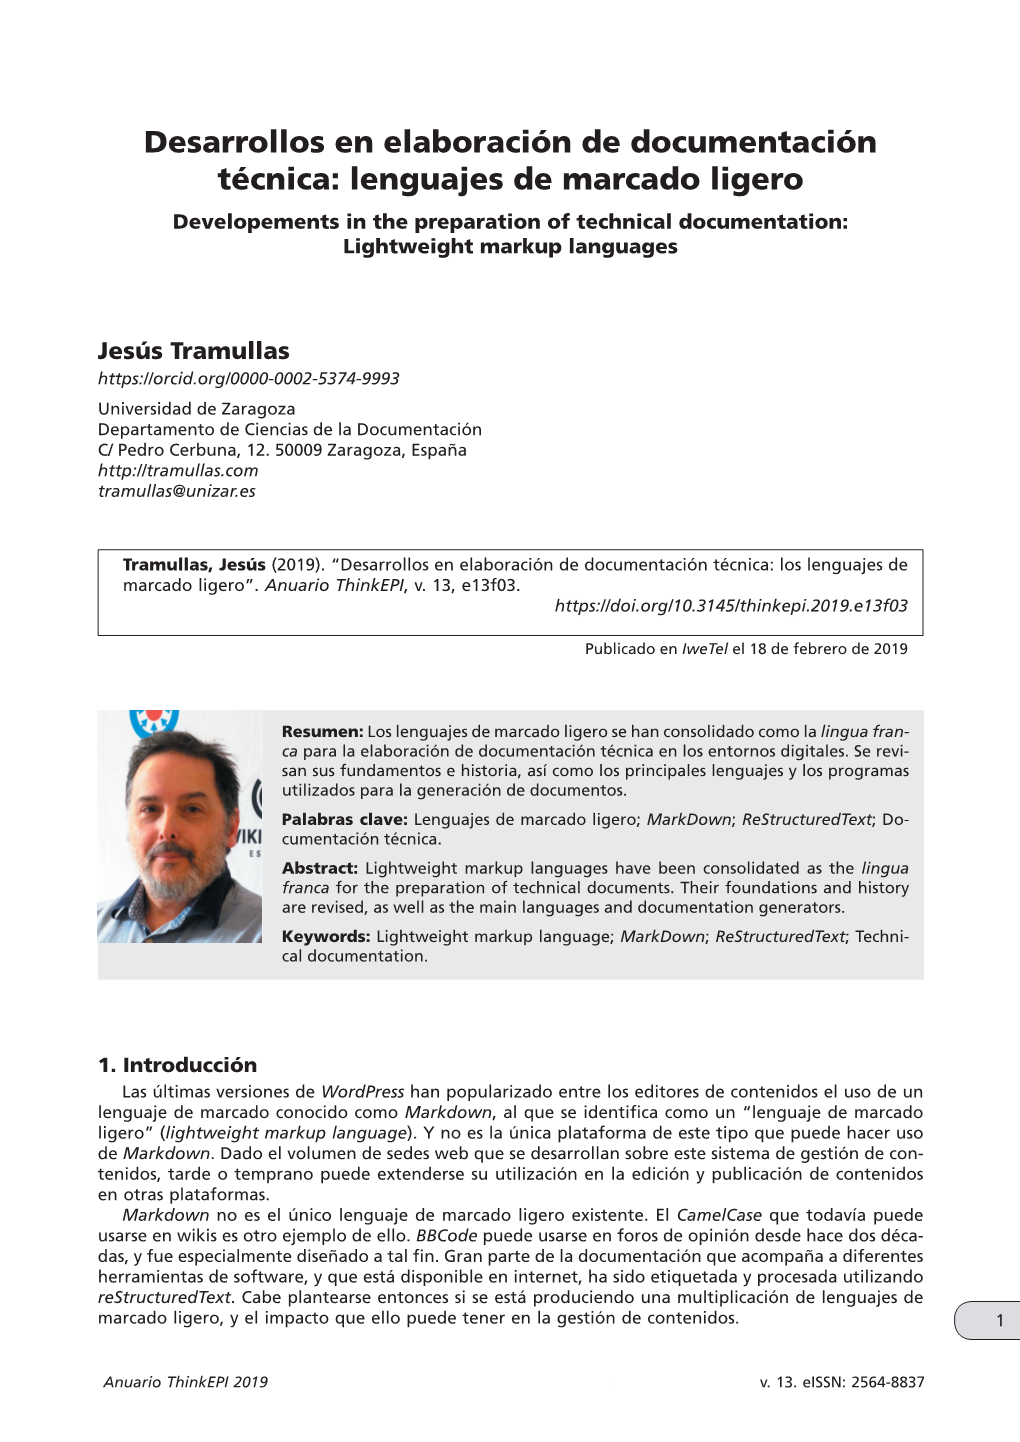 Lenguajes De Marcado Ligero Developements in the Preparation of Technical Documentation: Lightweight Markup Languages